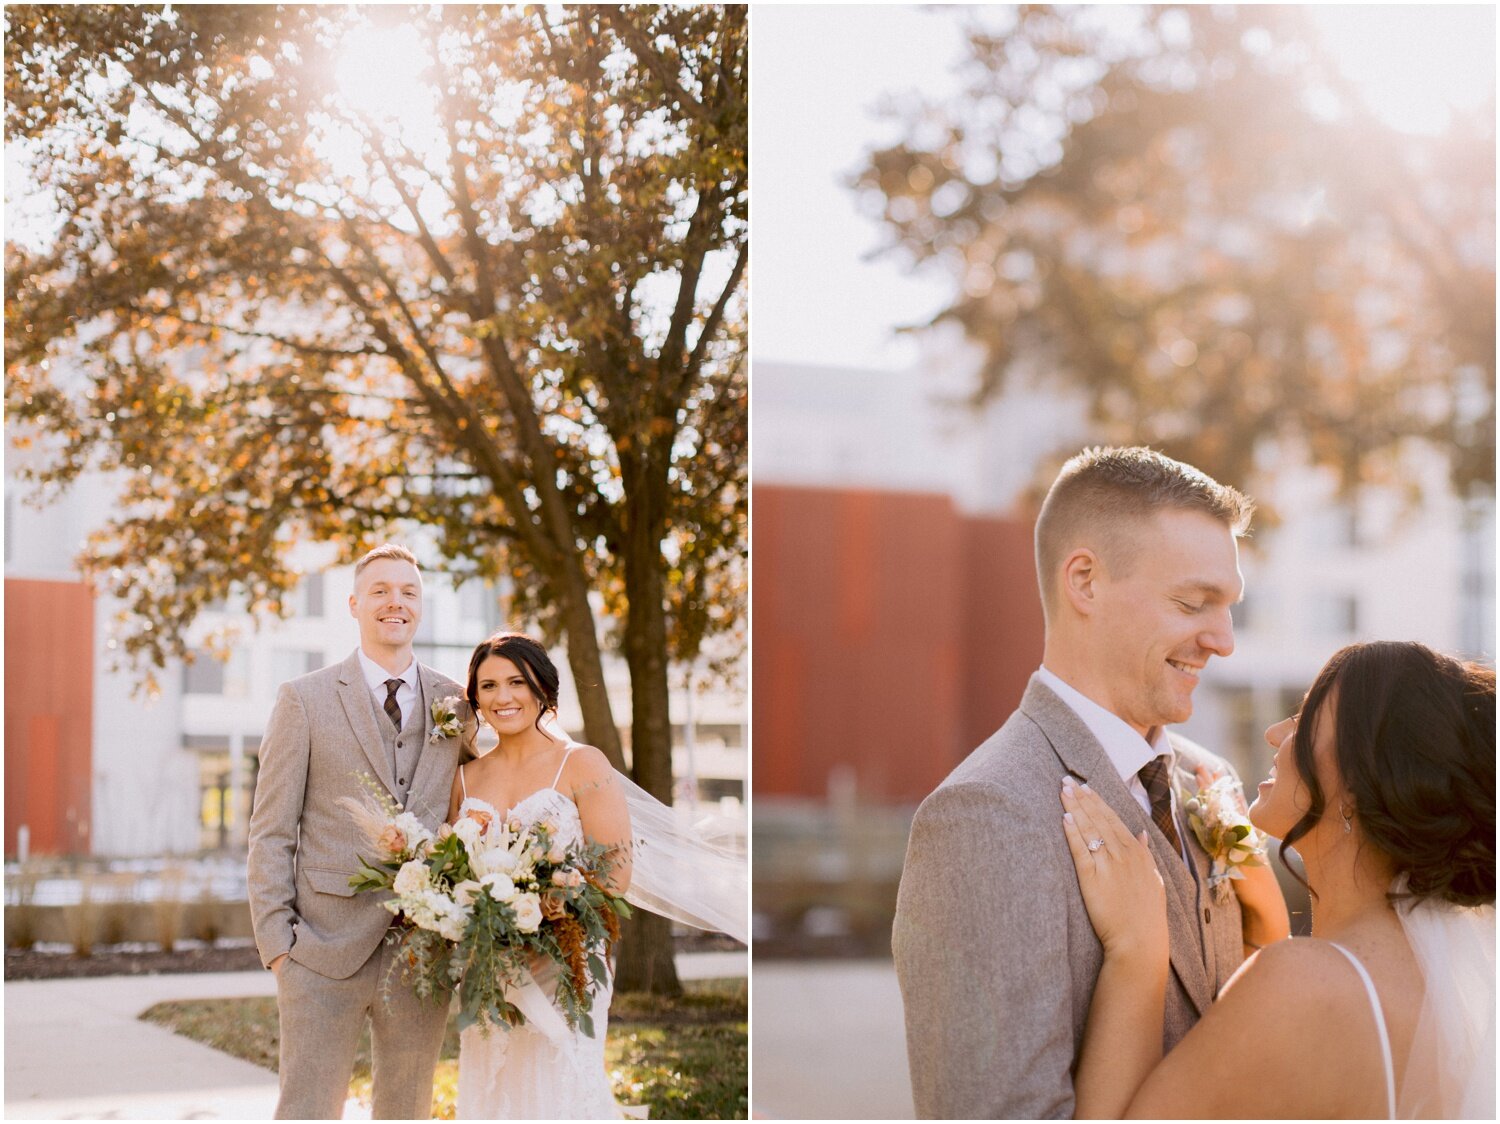 Andrew Ferren Photography - Des Moines Iowa Wedding Photographer - Destination - Engagement - Videography - Videographer - The River Center24.jpg